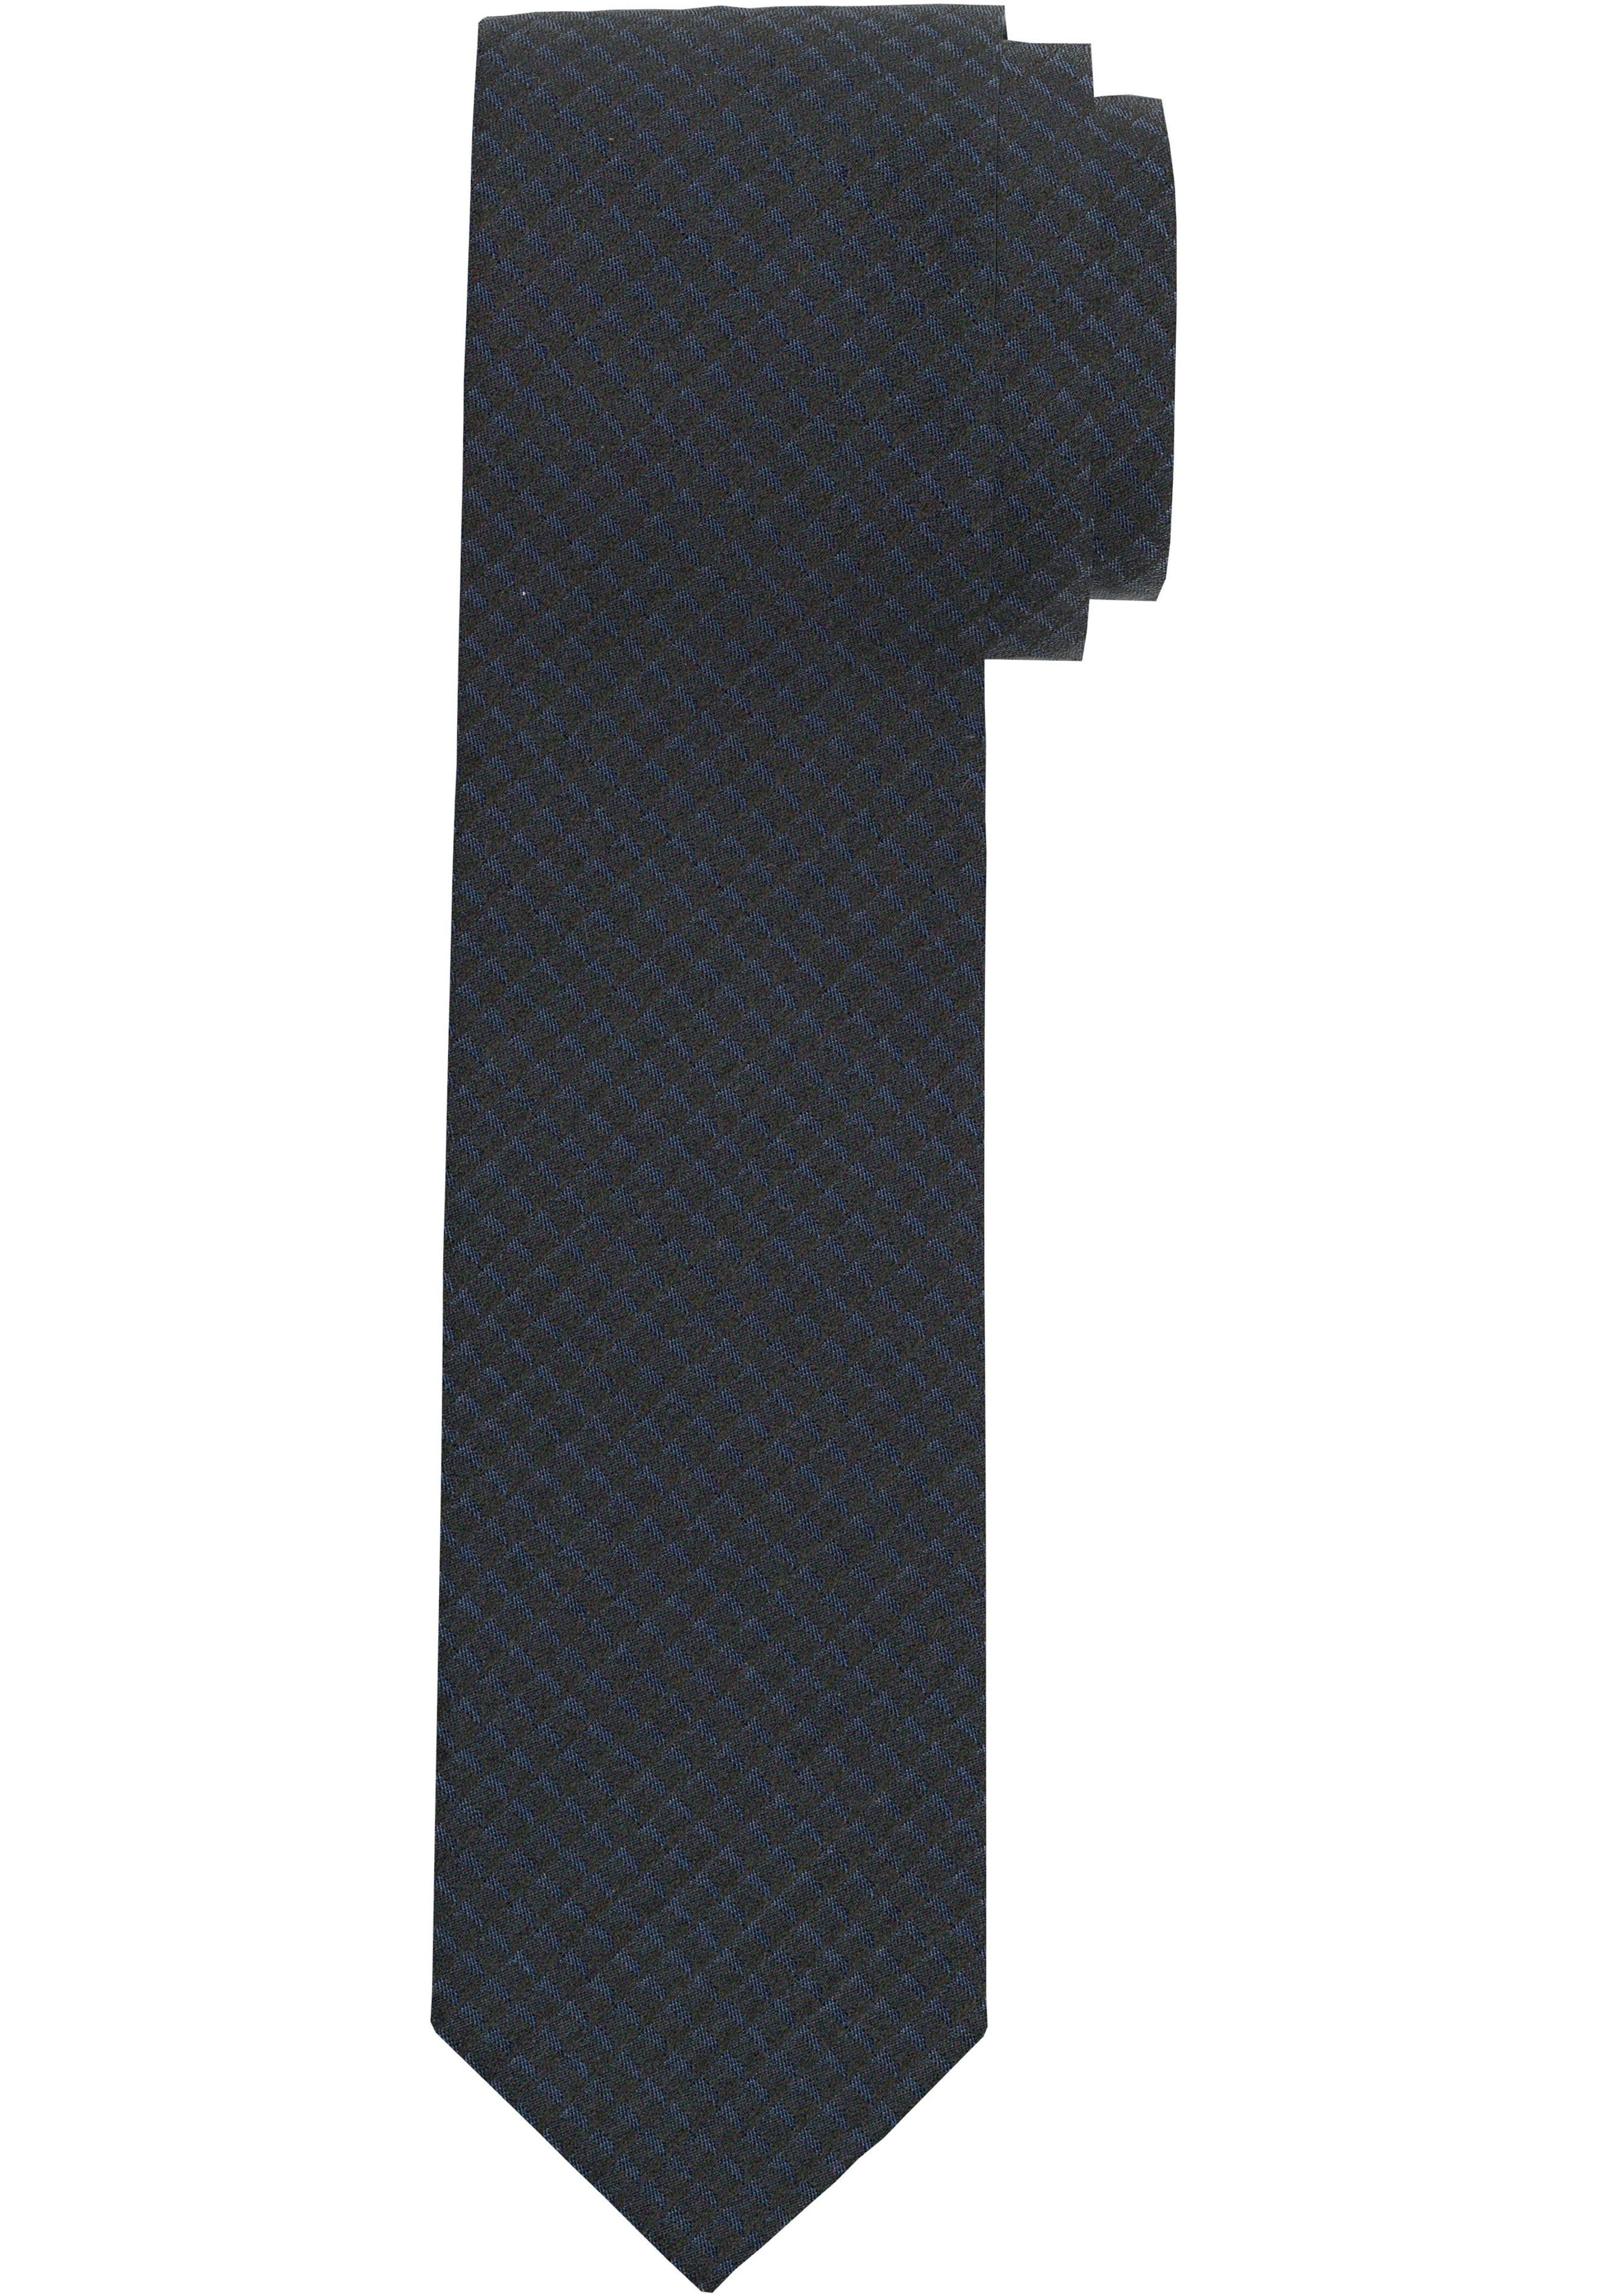 Krawatte Krawatte marine OLYMP mit Strukturmuster